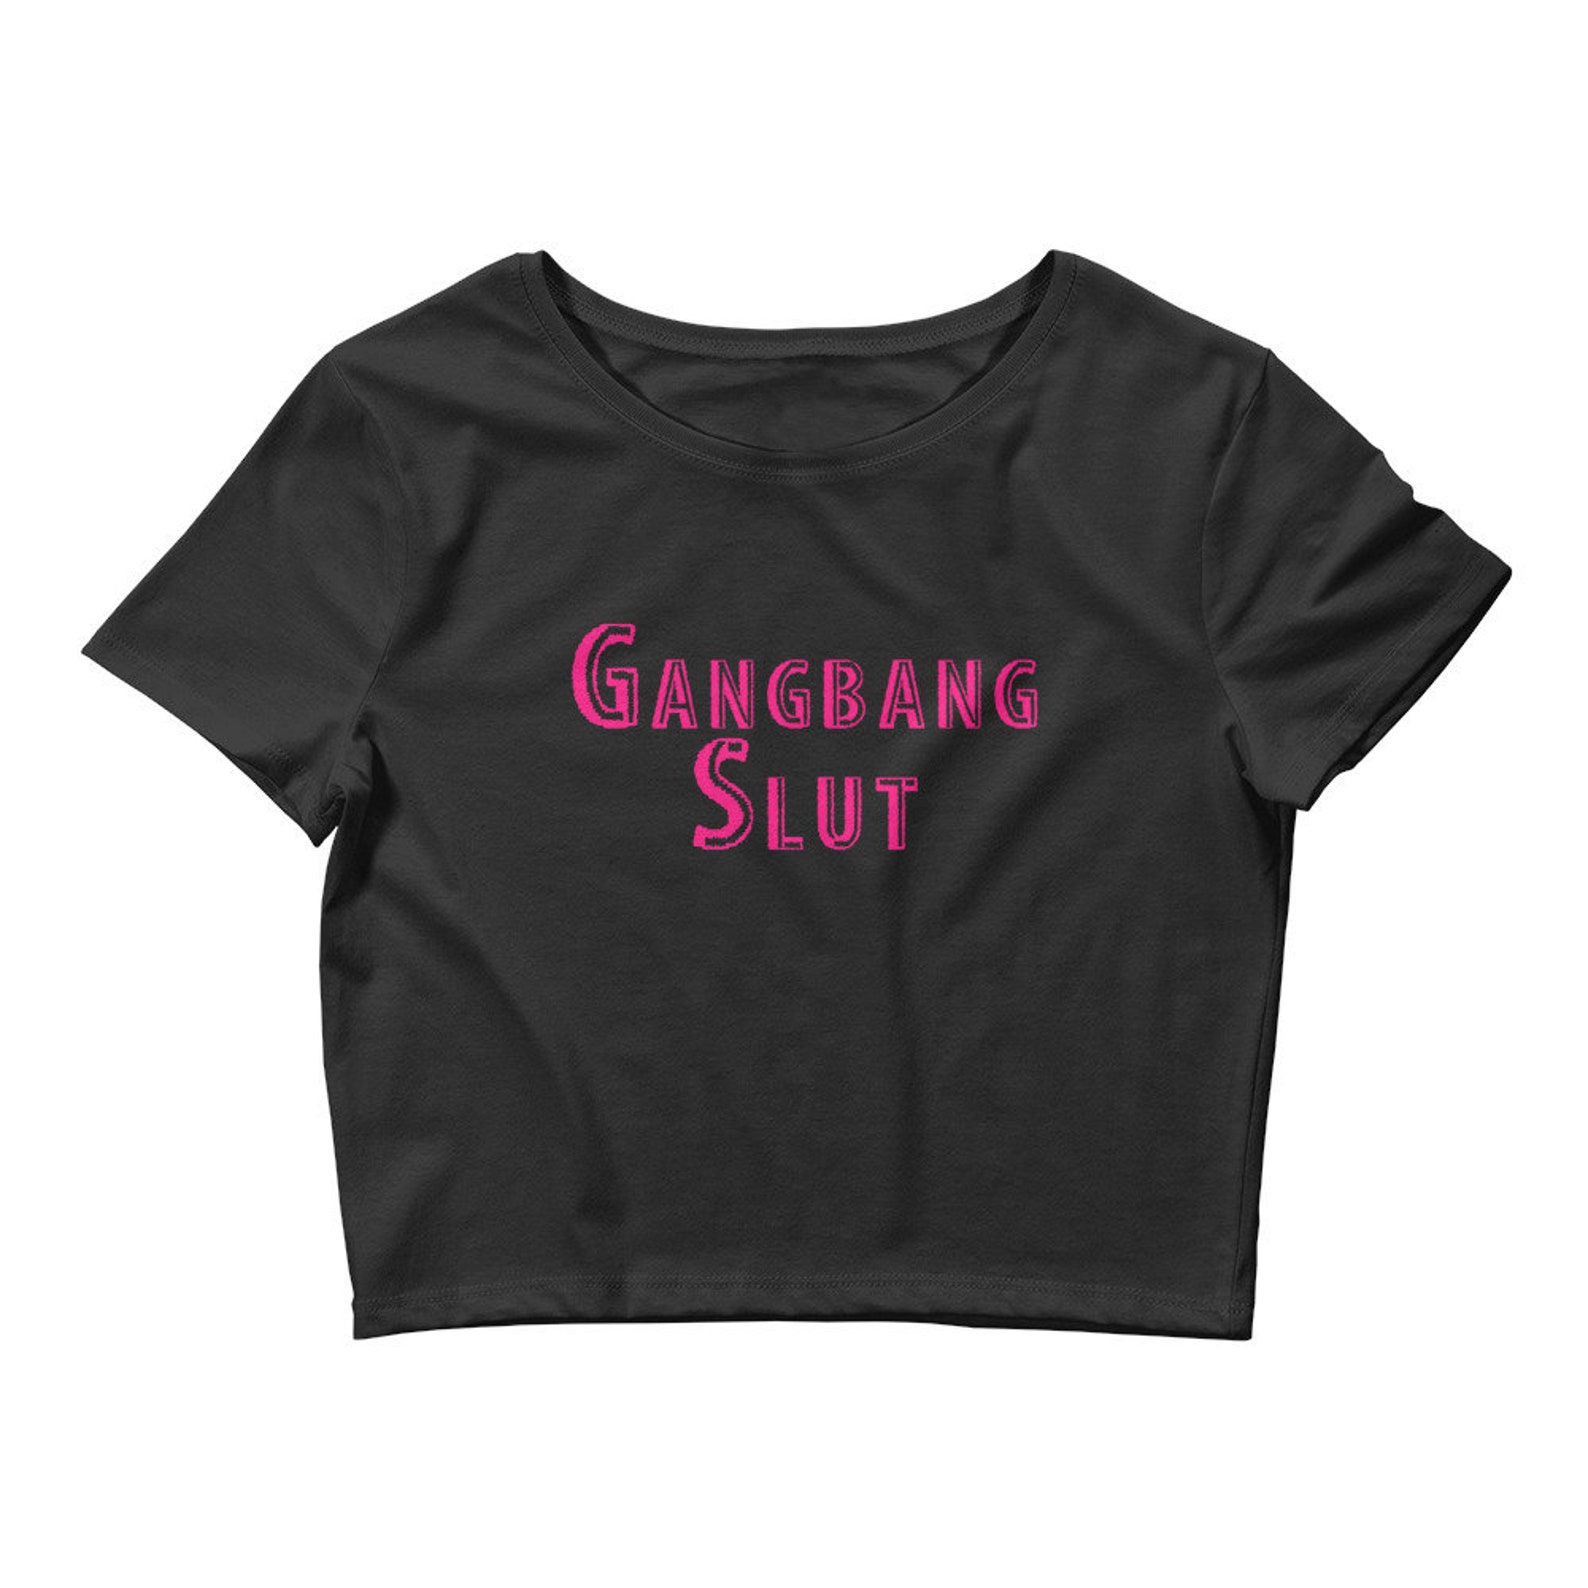 Gangbang Slut Crop Top Hotwife Swinger Shirt Naughty Group Etsy 